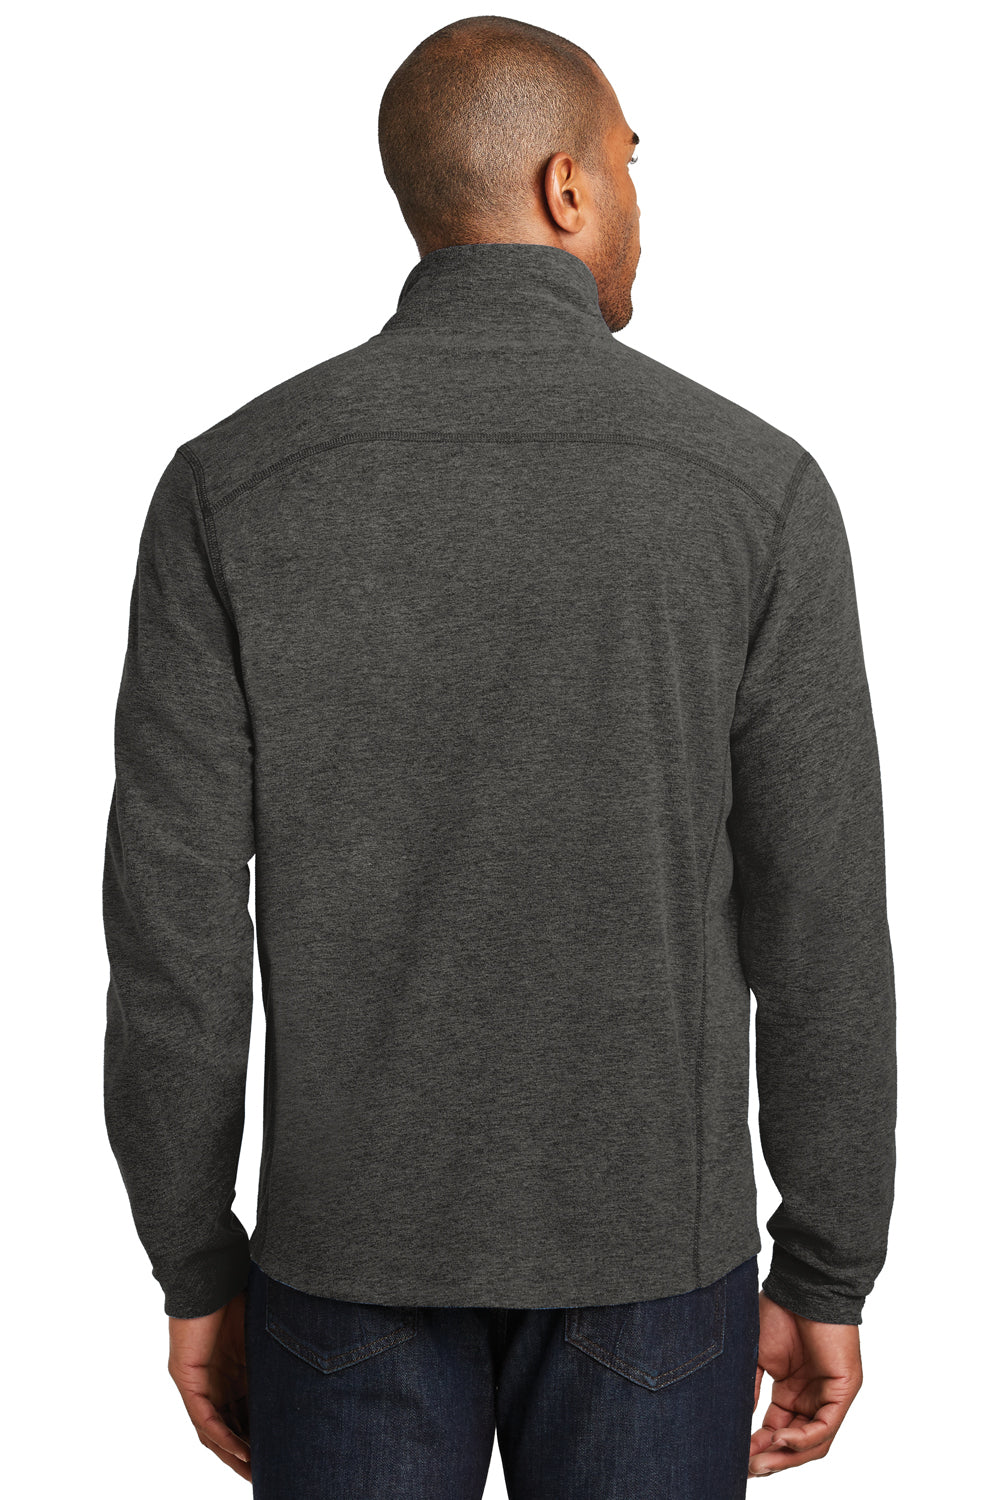 Port Authority F235 Mens Heather Microfleece Full Zip Sweatshirt Charcoal Black Back